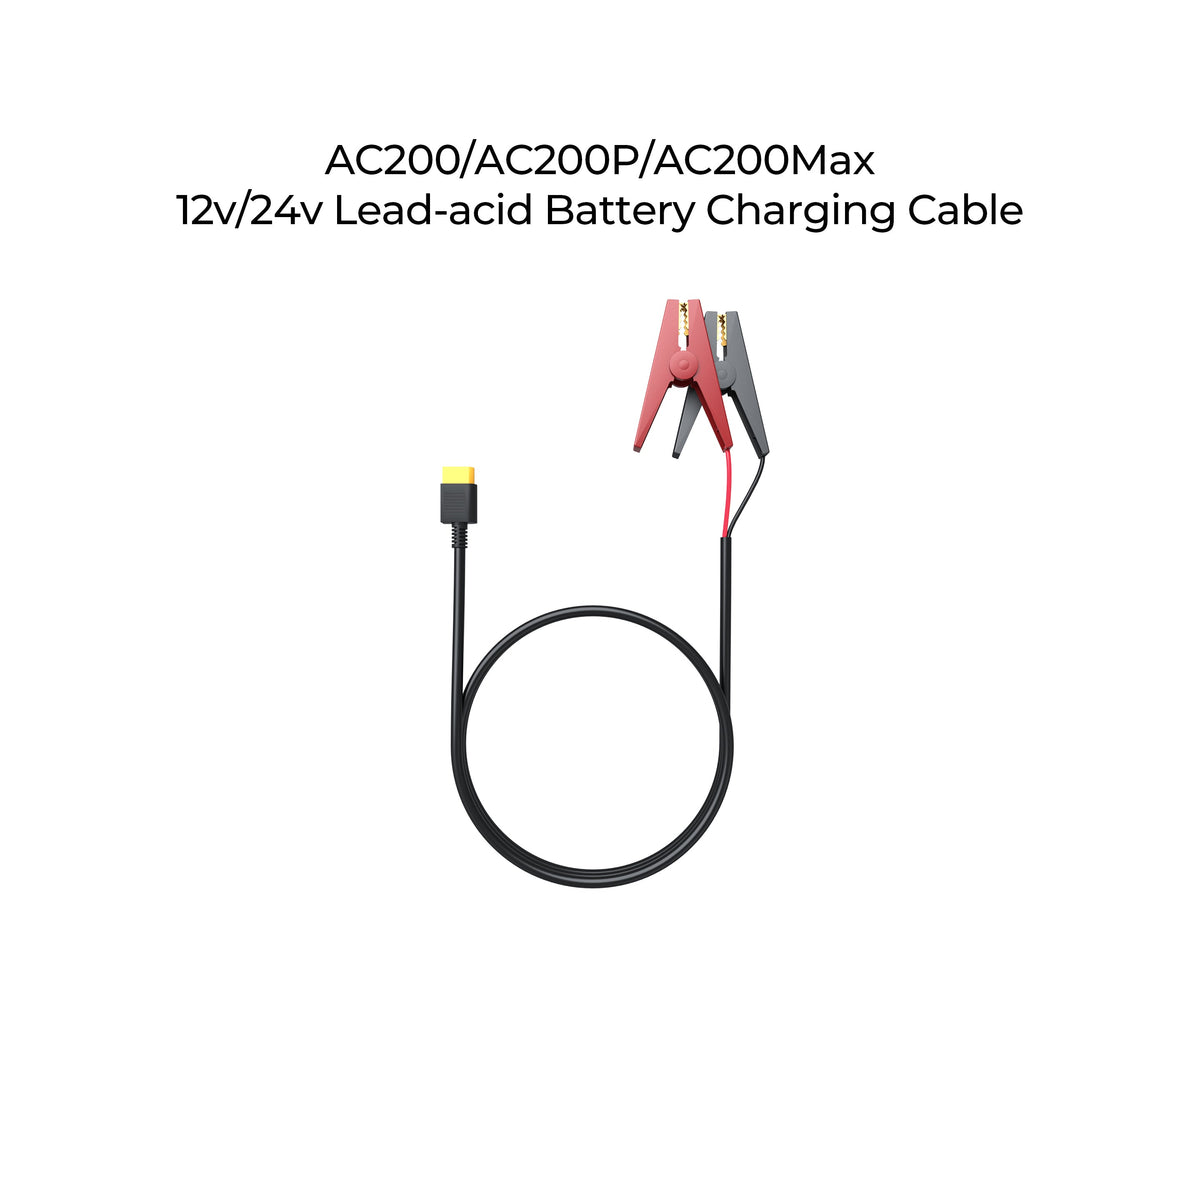 BLUETTI 12v/24v Lead-acid Battery Charging Cable